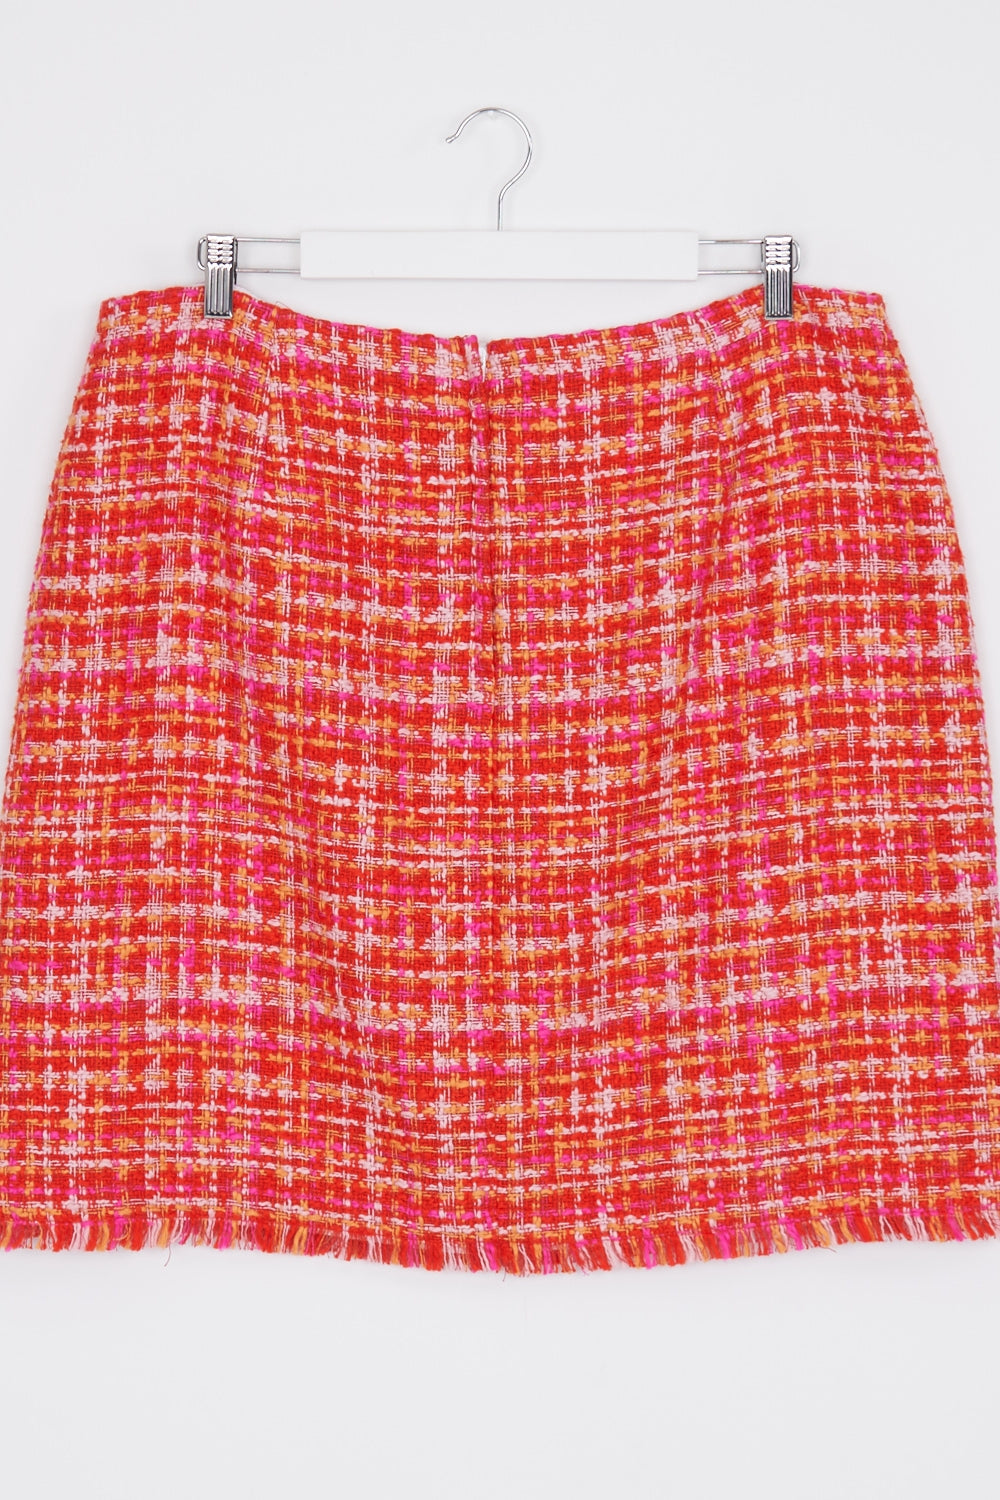 Perri Cutten Red Millie Skirt 18